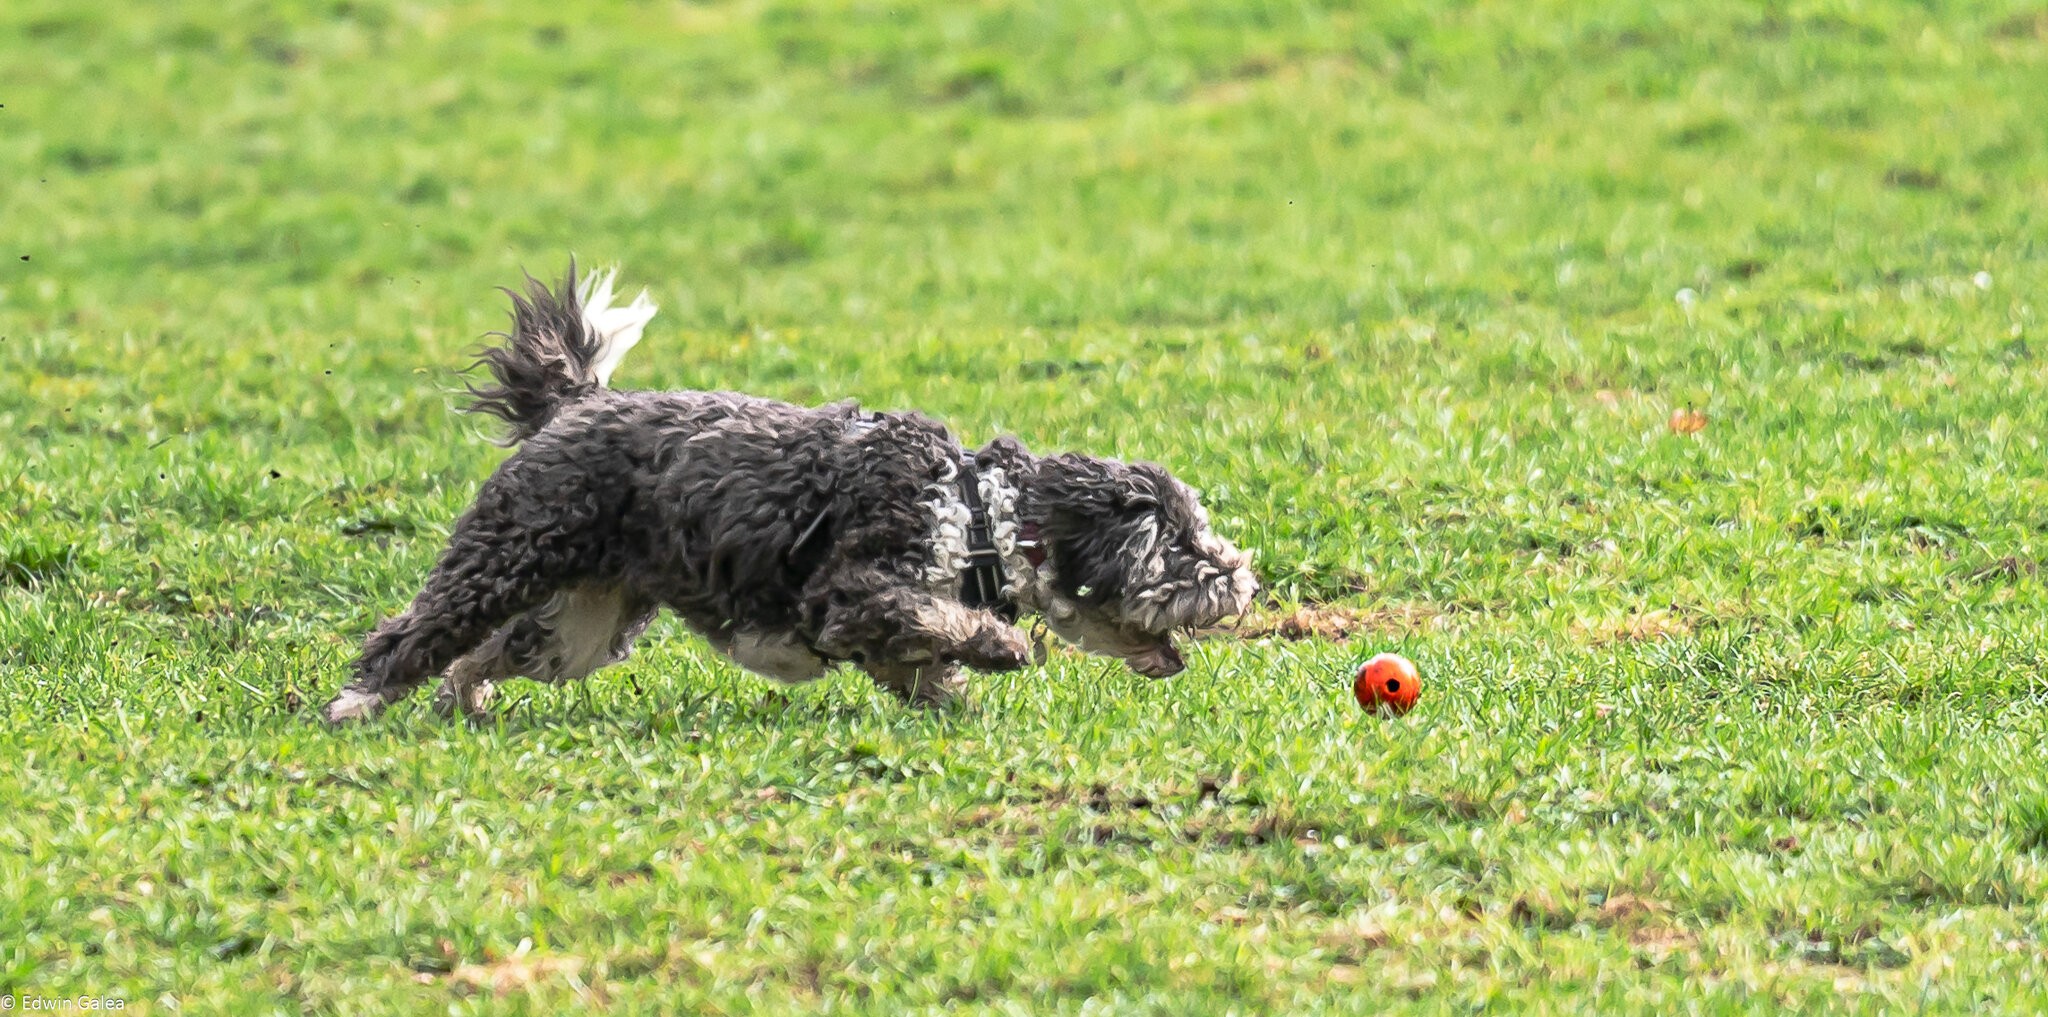 dog_chasing_ball-2.jpg